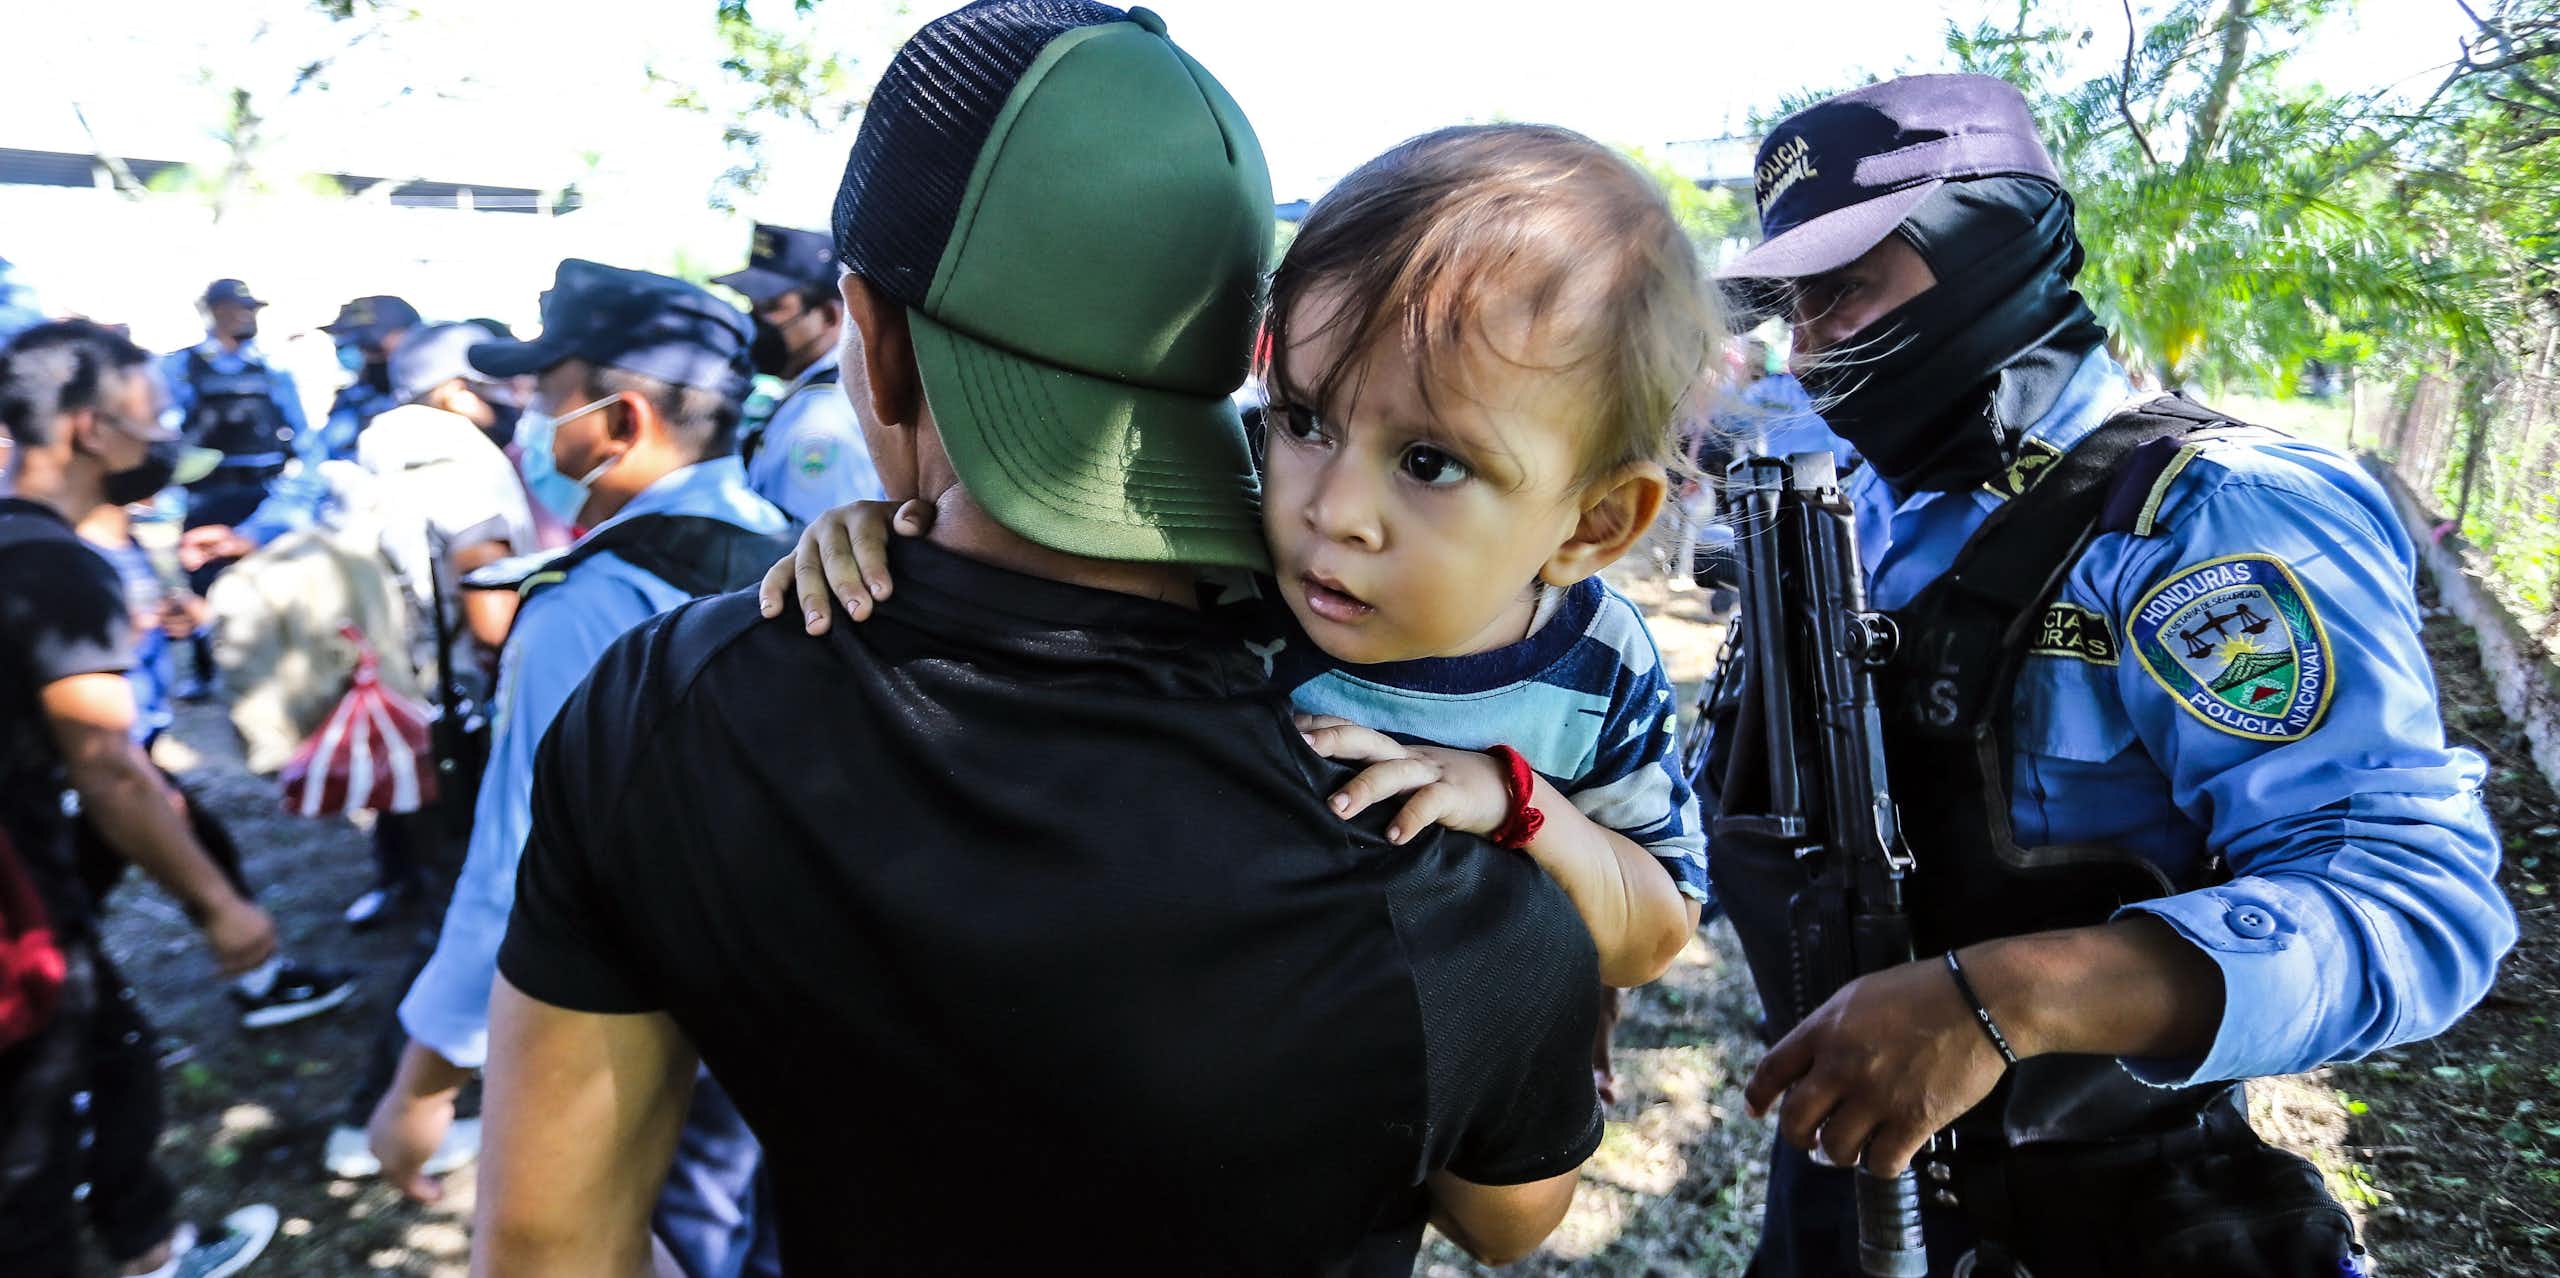 A man in a baseball cap holds a child next to a uniformed man holding a gun.